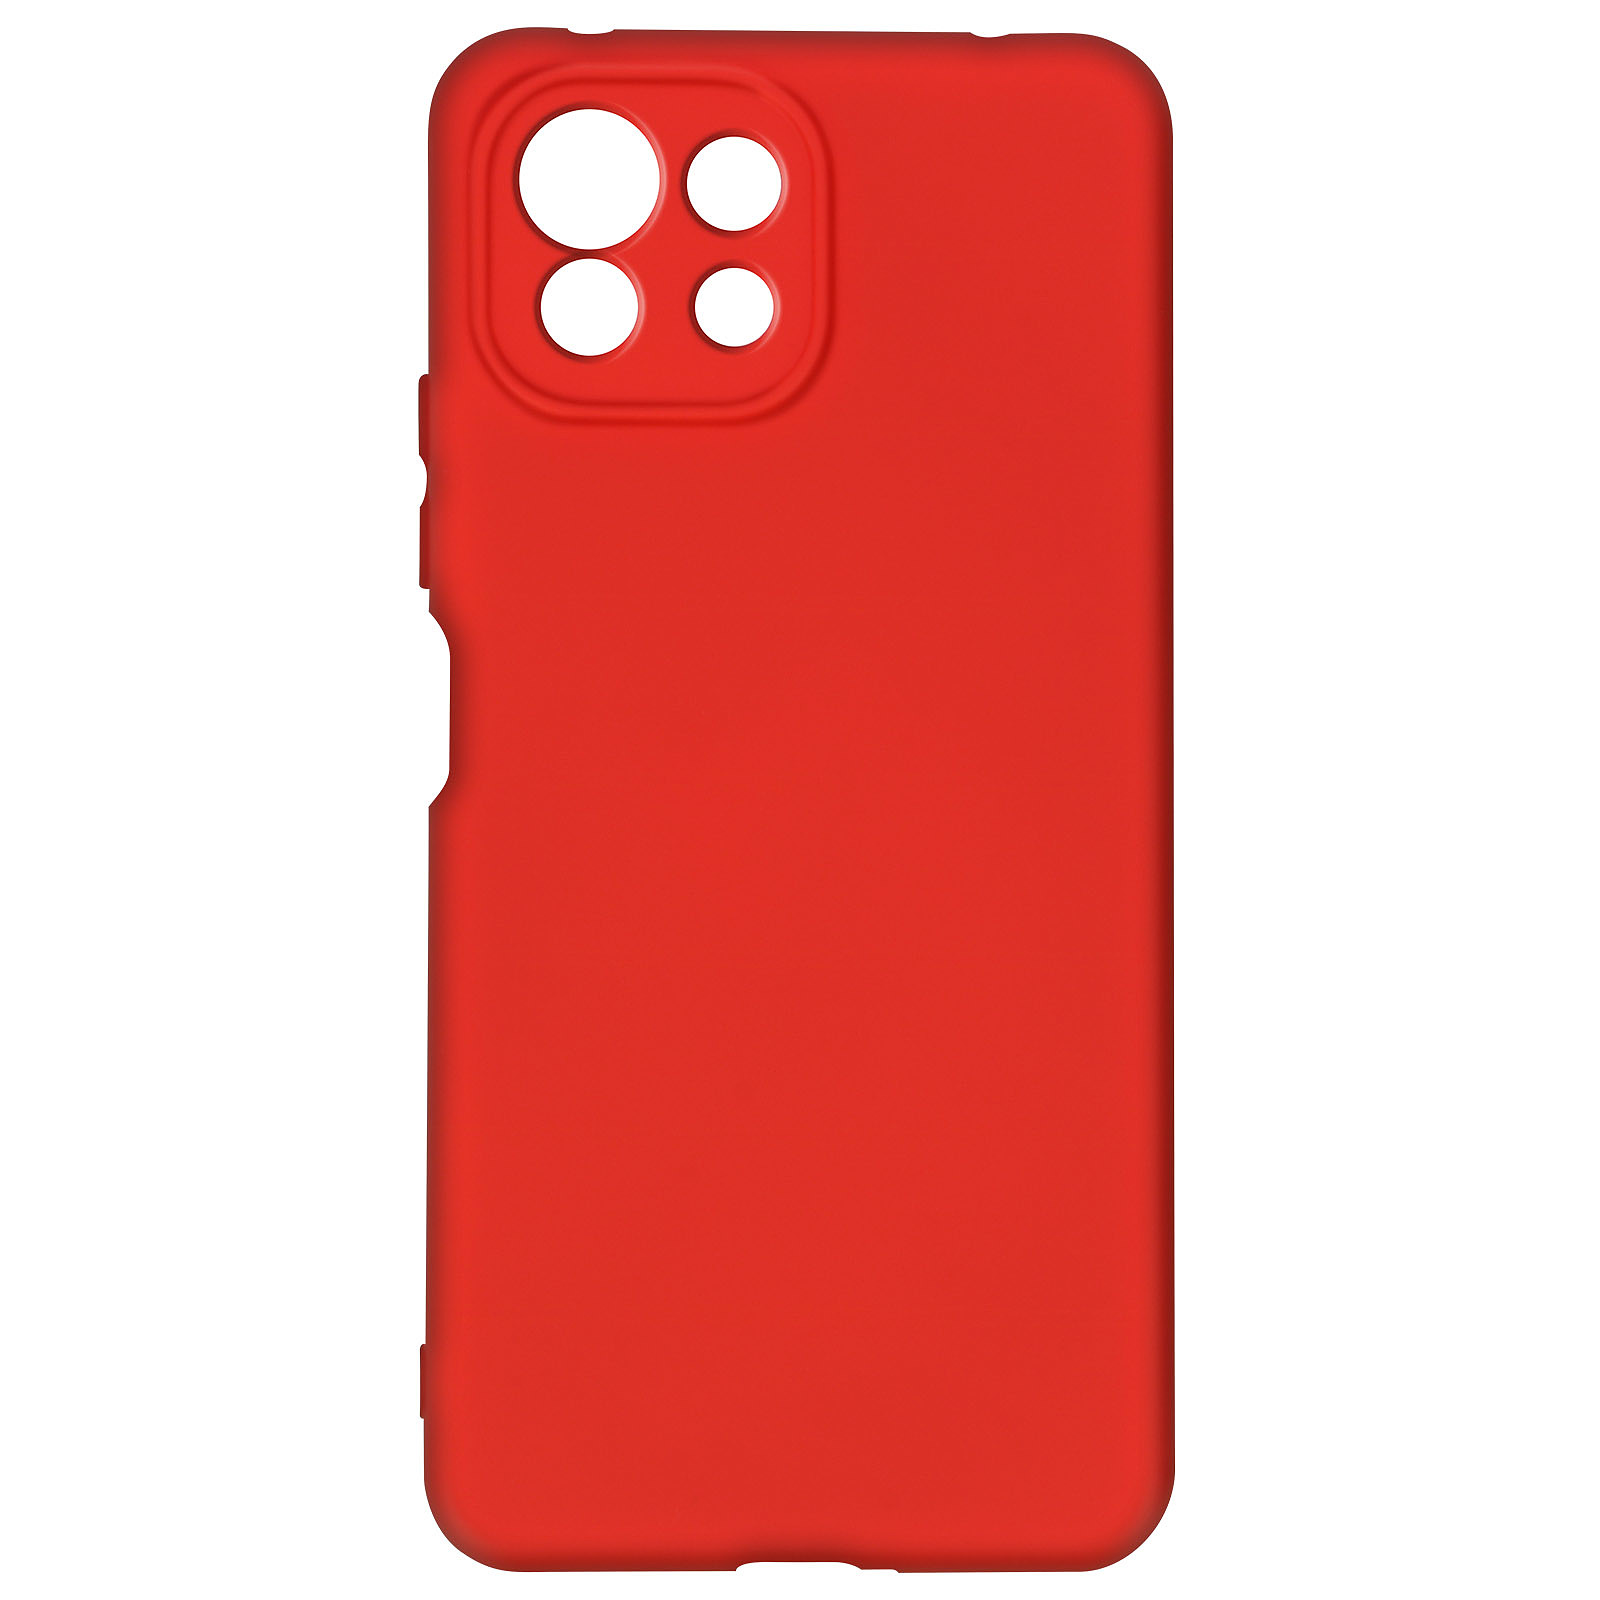 Avizar Coque pour Xiaomi Mi 11 Lite et Mi 11 Lite 5G Silicone Gel Souple Finition Soft Touch Rouge - Coque telephone Avizar